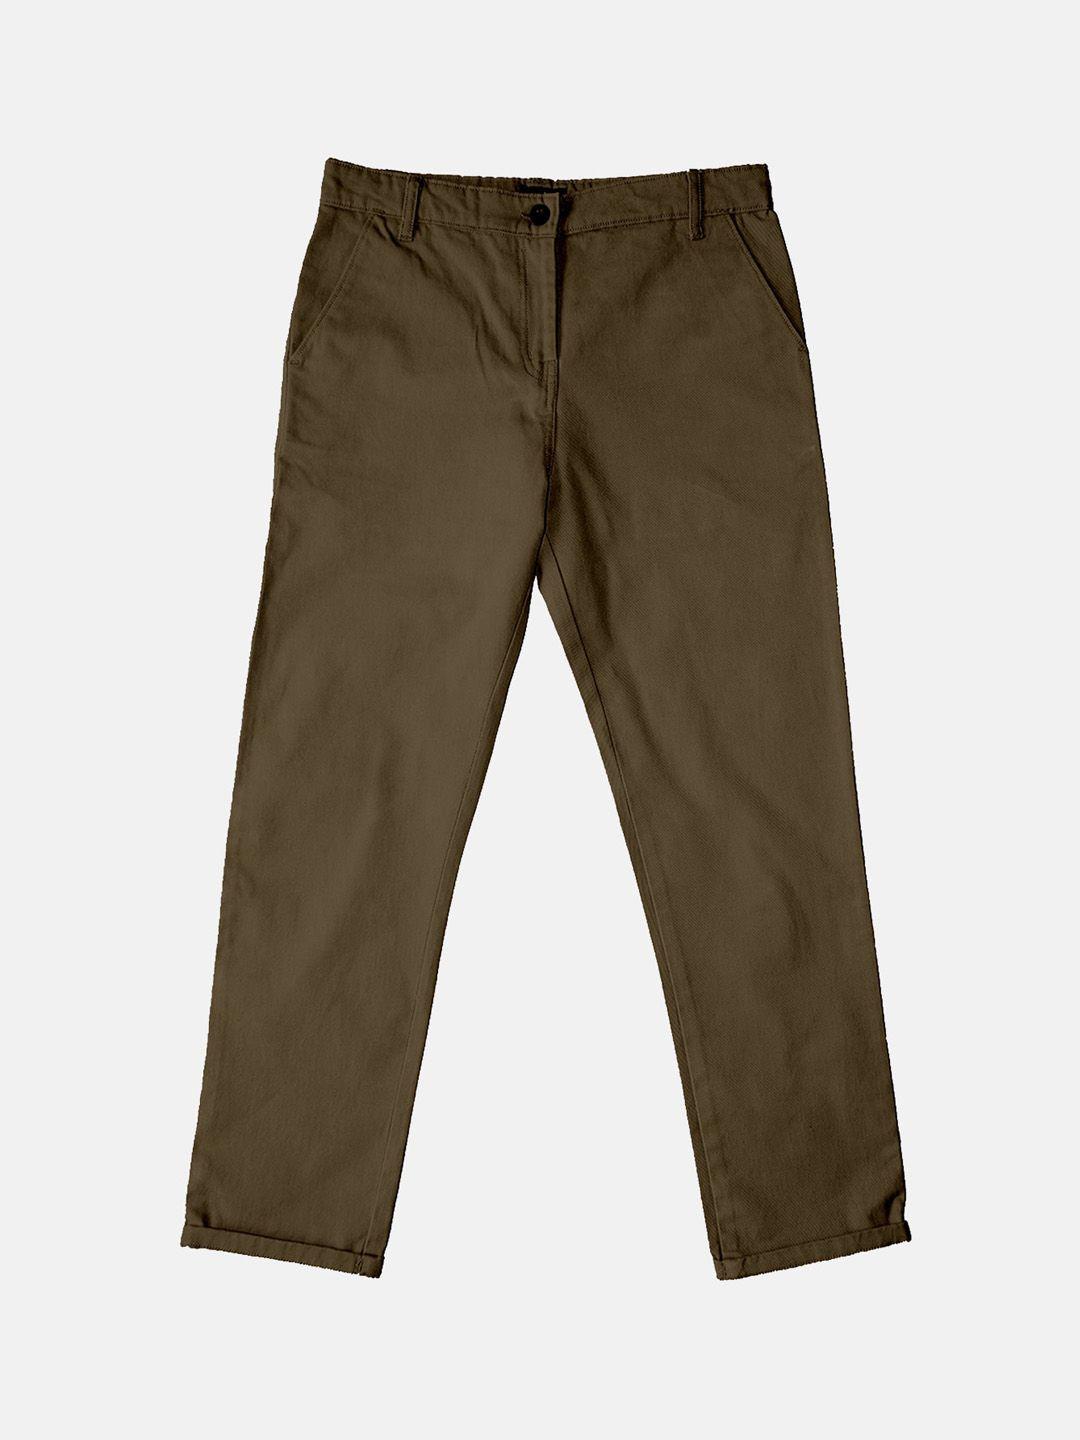 kiddopanti-boys-mid-rise-pure-cotton-chinos-trousers